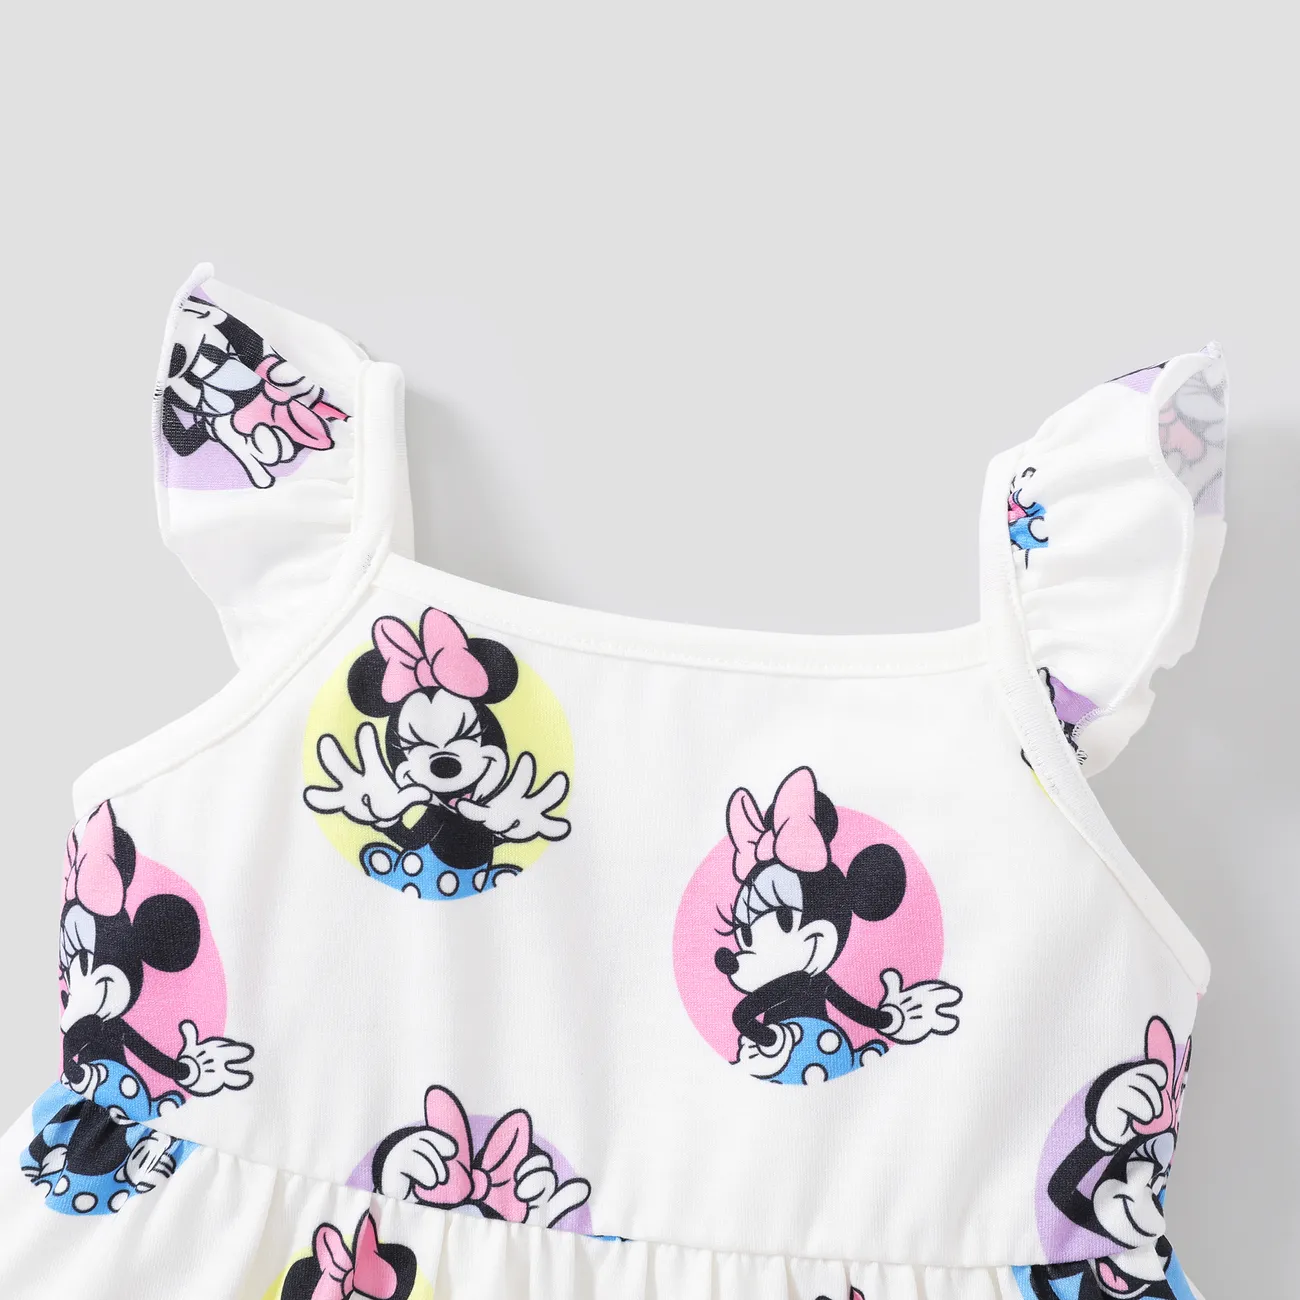 Disney Mickey and Friends 嬰兒/幼兒女孩角色印花荷葉邊袖連衣裙 白色 big image 1